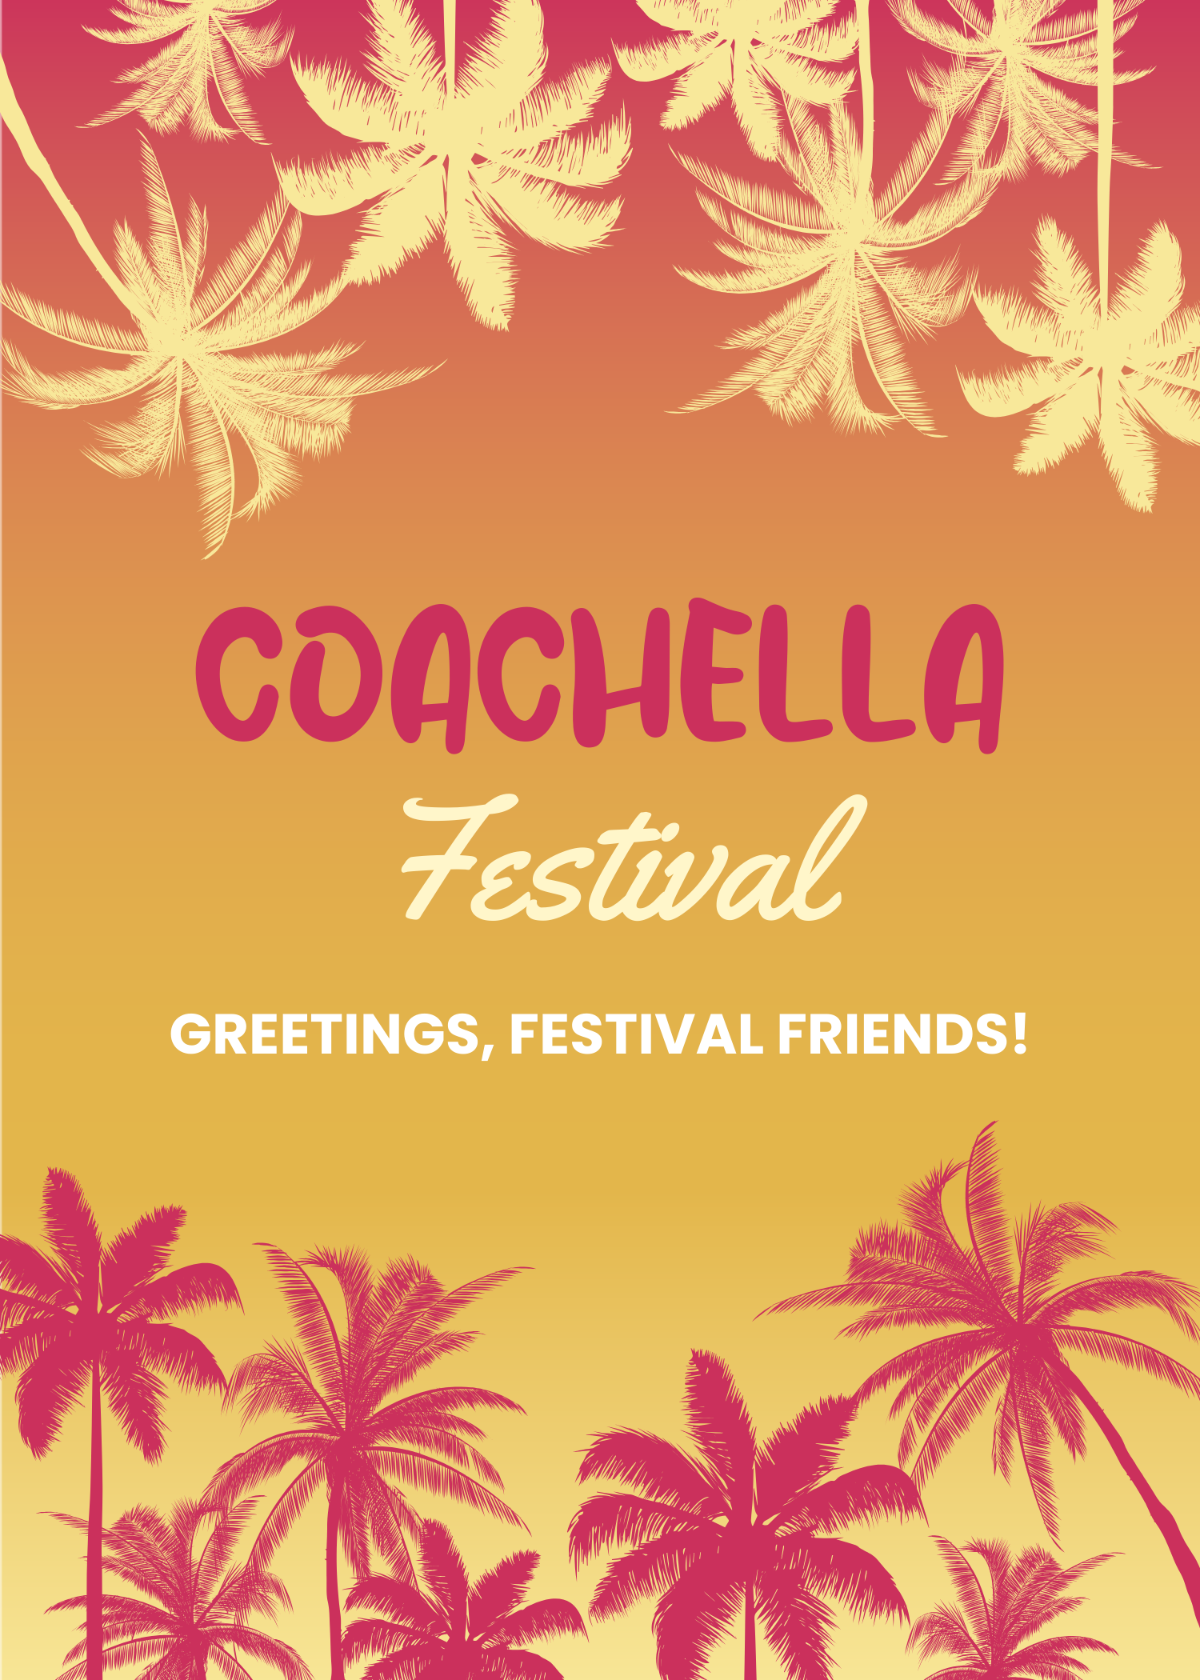 Coachella Festival Greeting Card Template